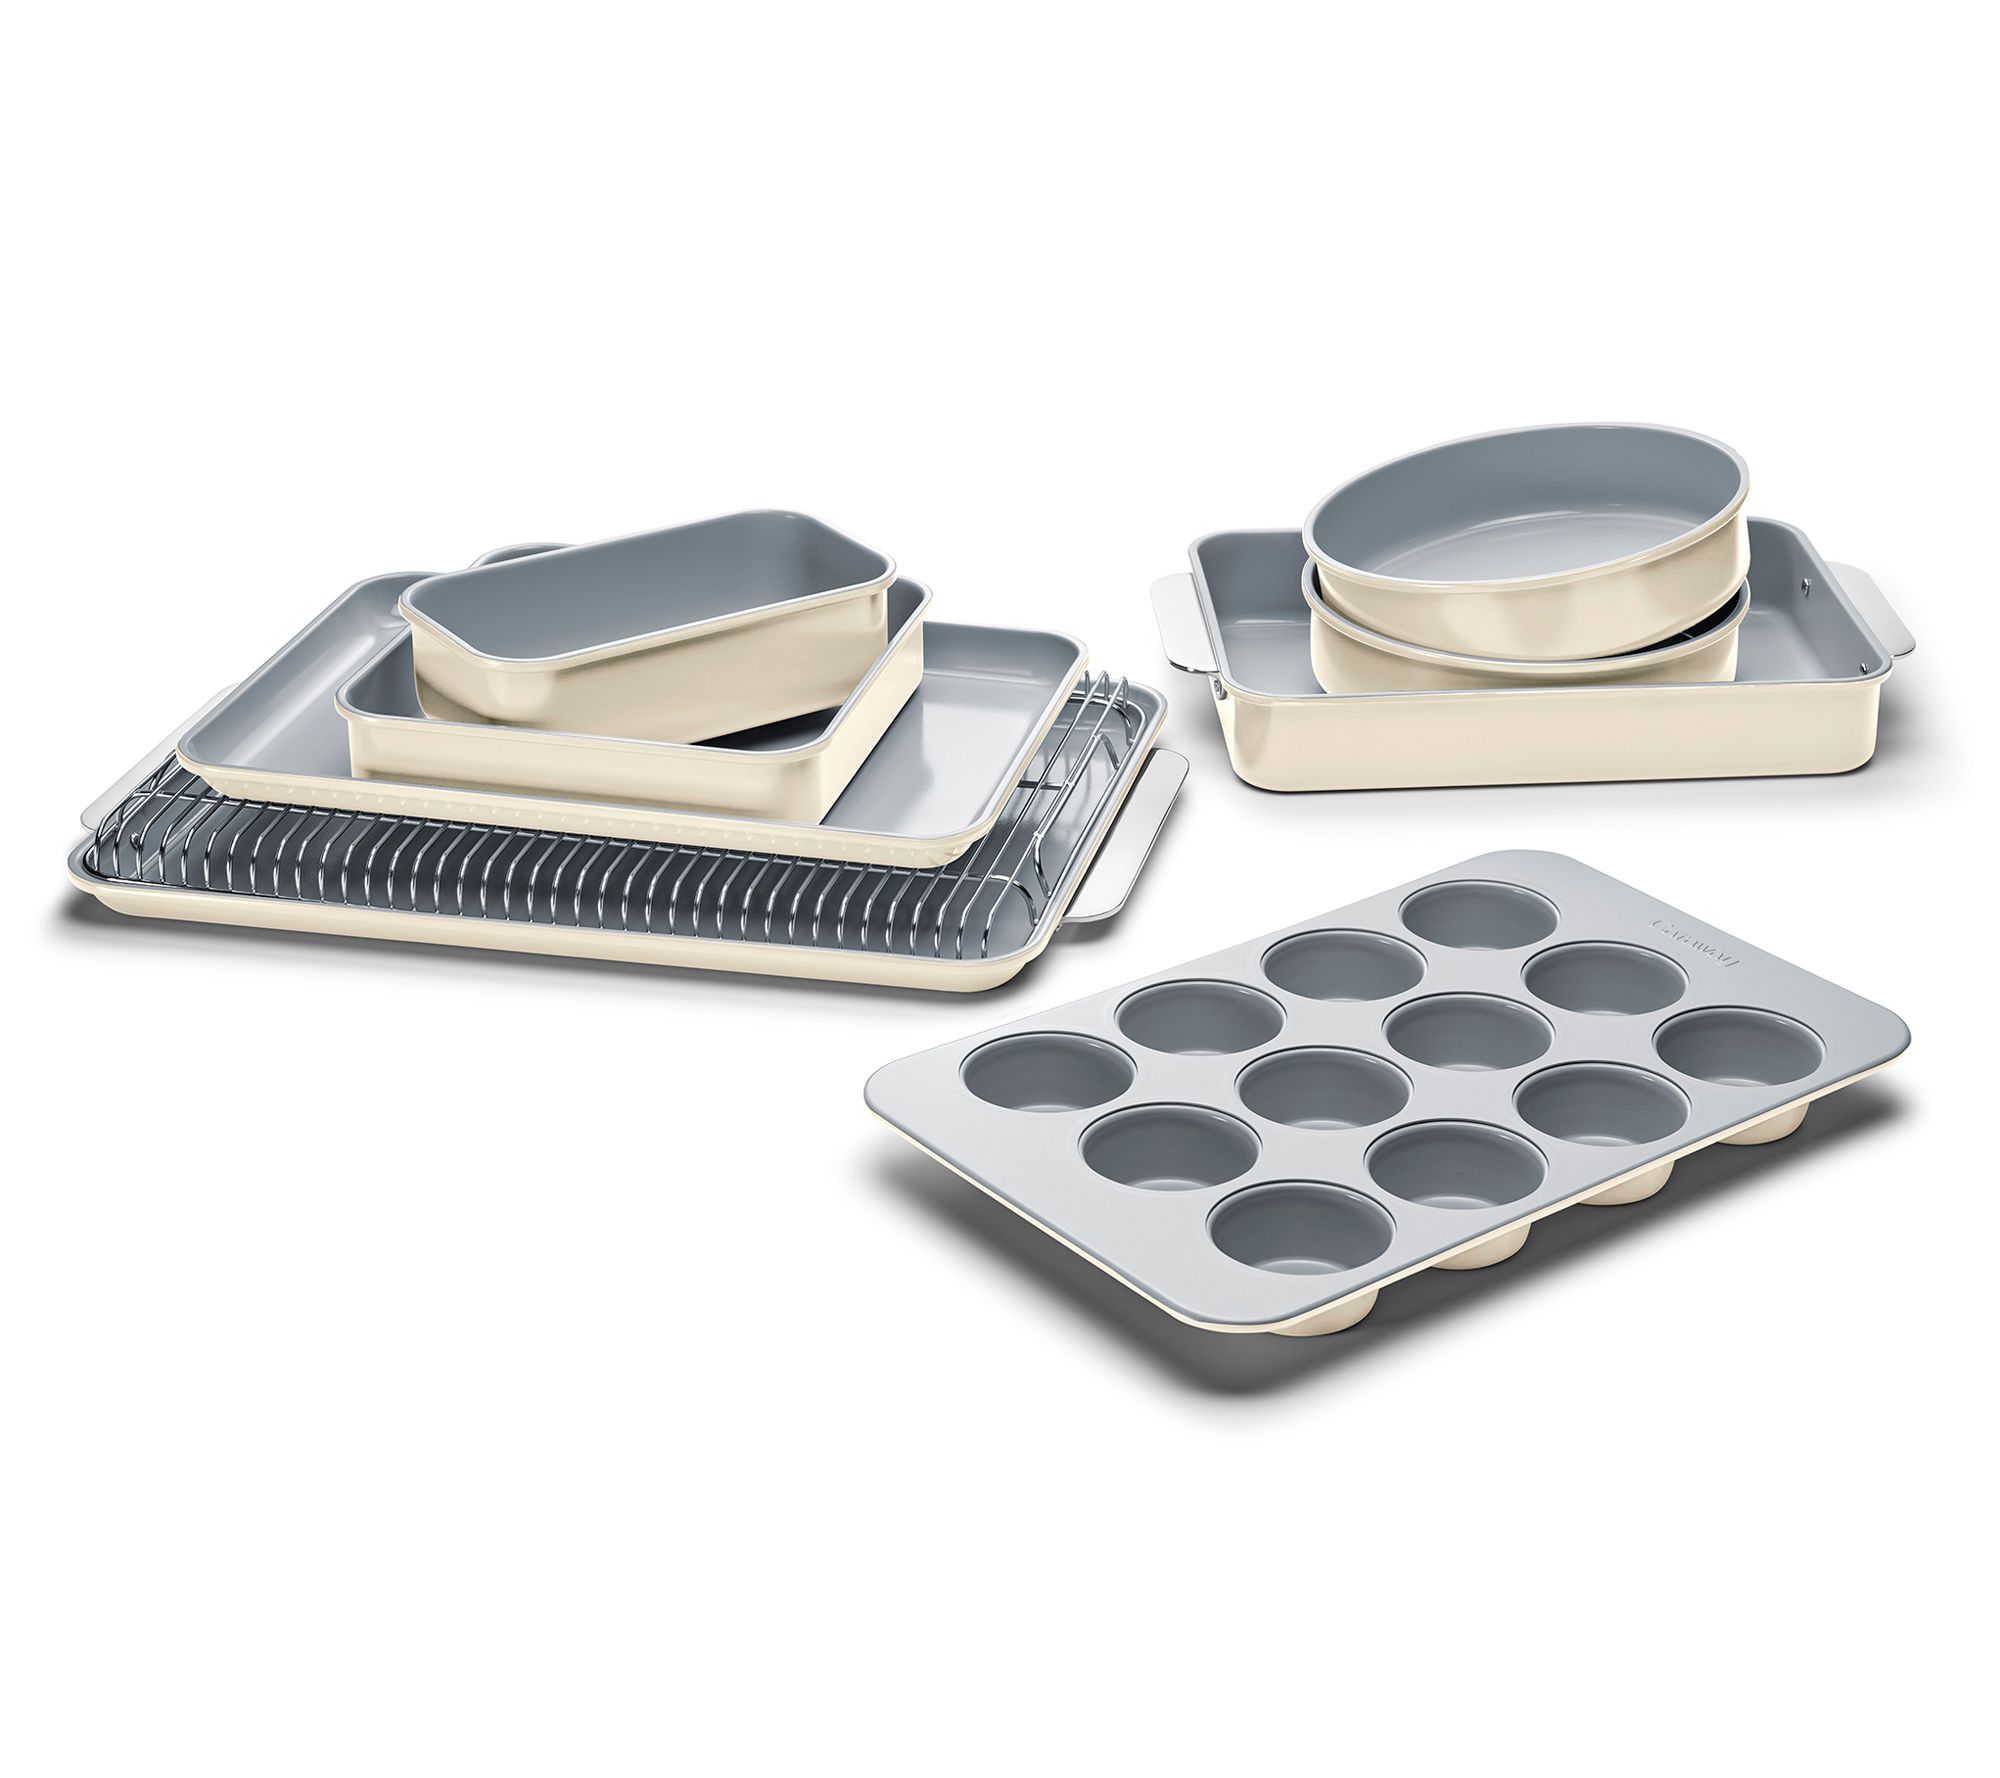 Farberware Specialty Bakeware Nonstick Pressure Cookware Bakeware Set, 4-Piece, Gray